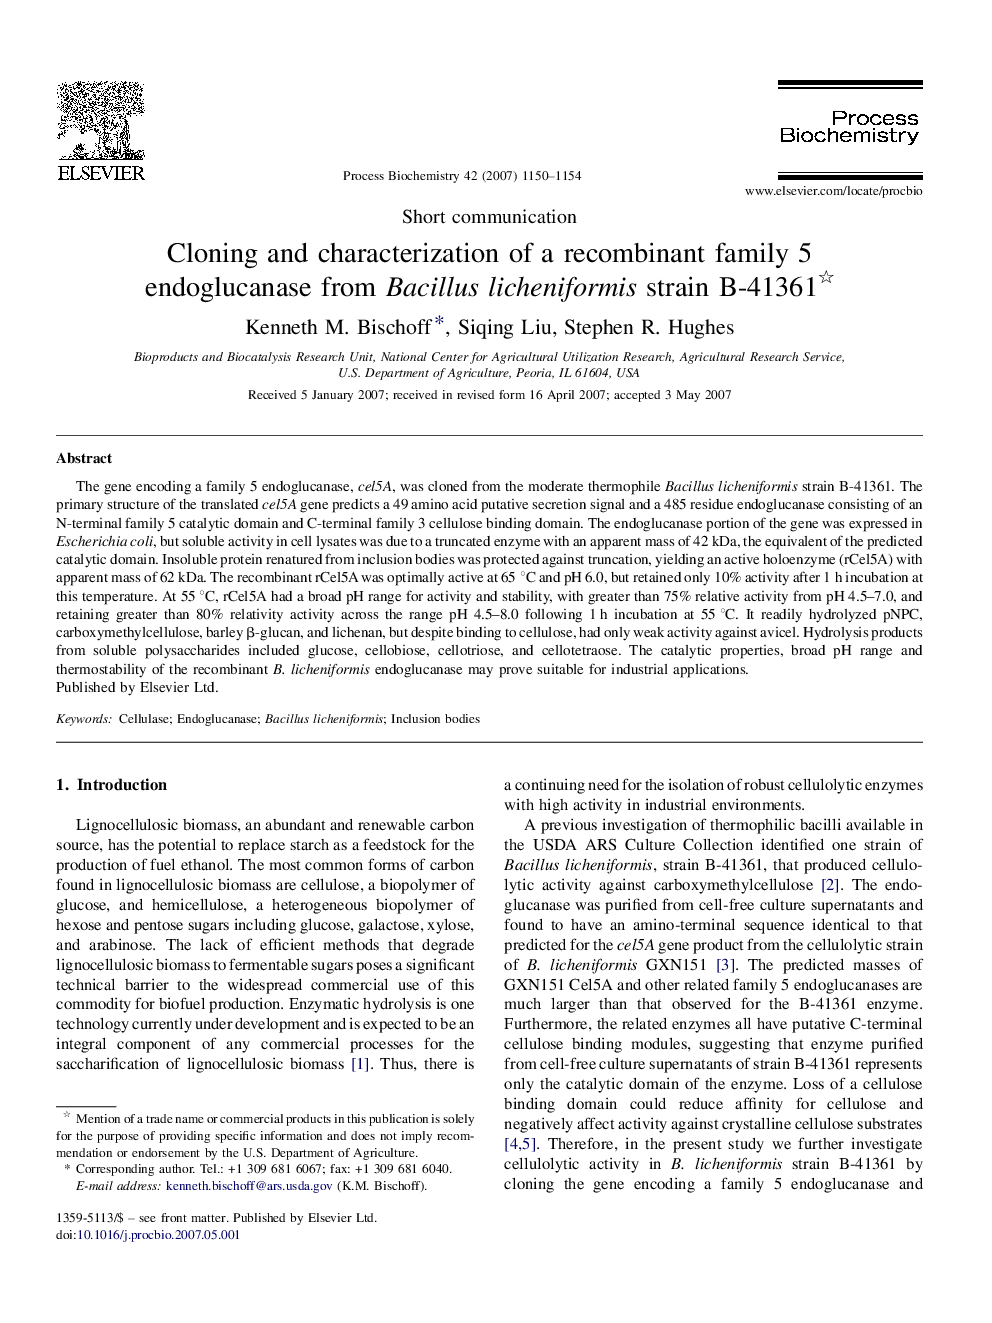 Cloning and characterization of a recombinant family 5 endoglucanase from Bacillus licheniformis strain B-41361 